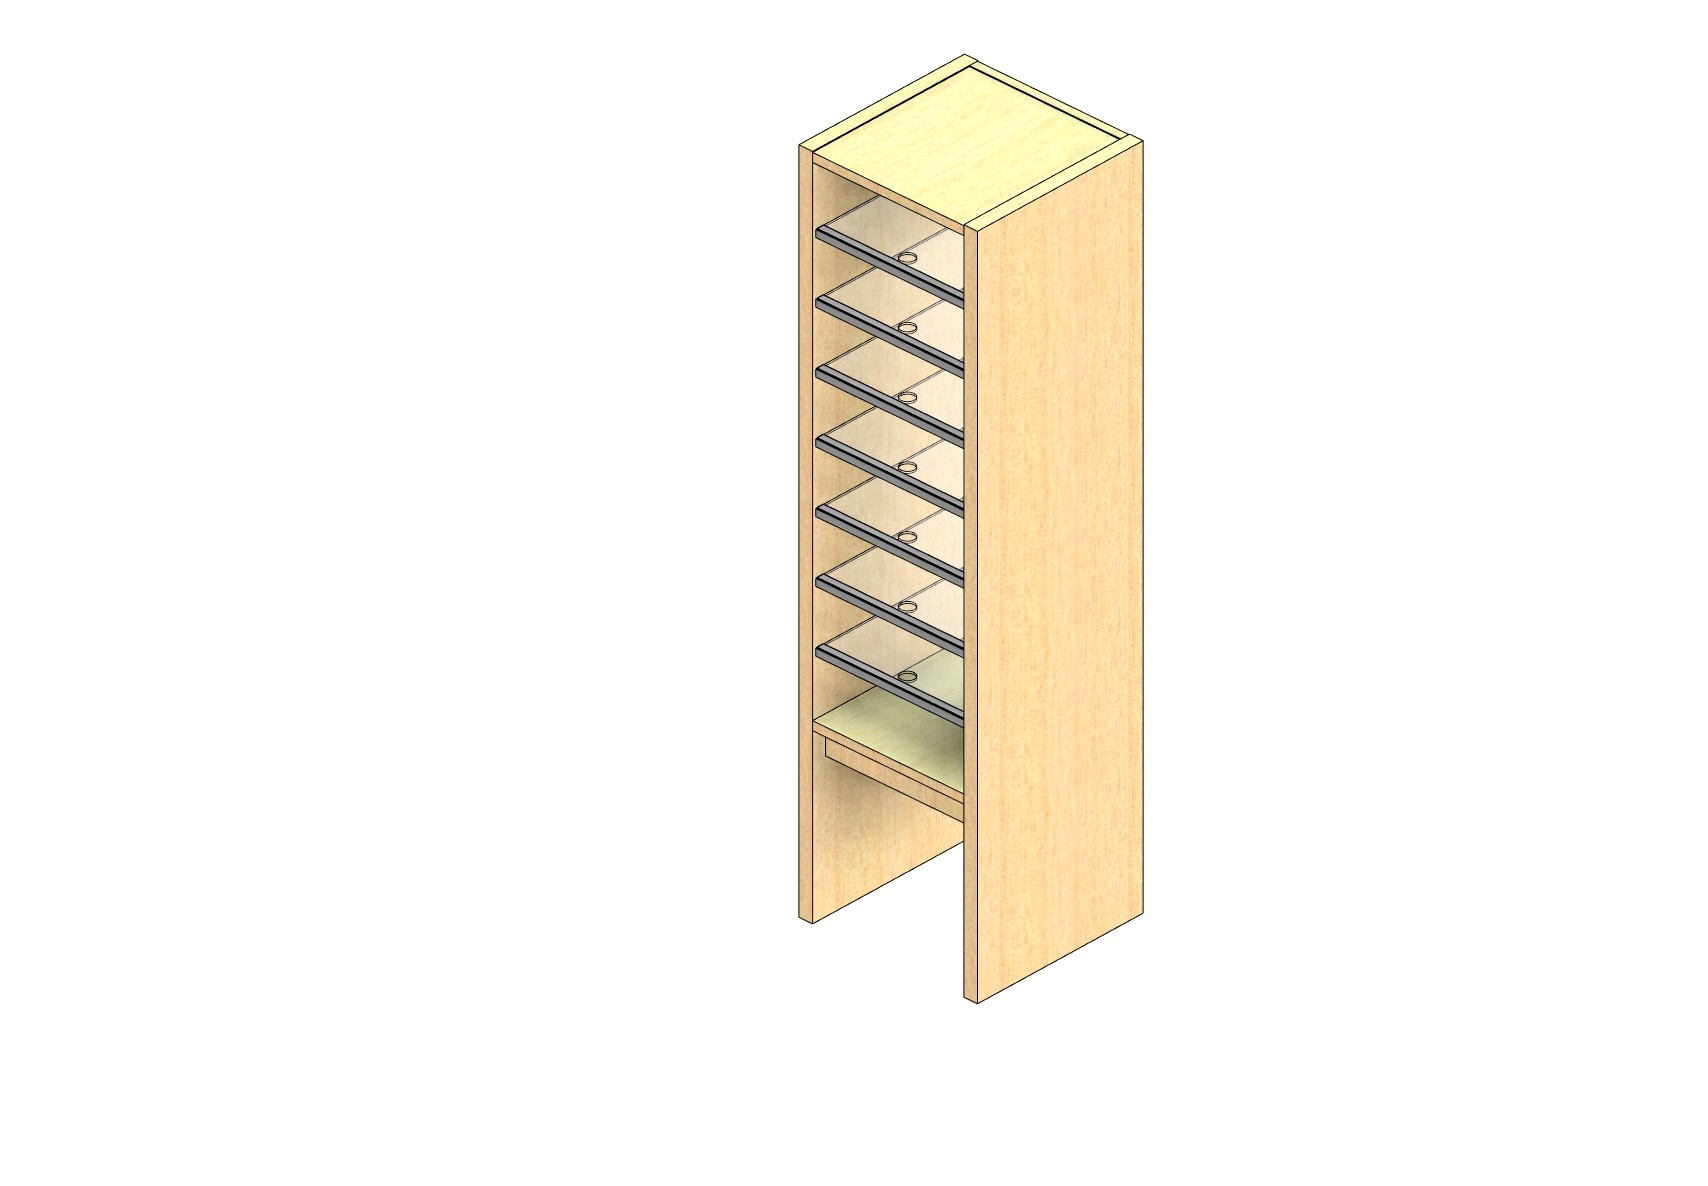 Standard Sized Plexi Back Sort Module - 1 Column - 36" Sorting Height w/ 12" Riser